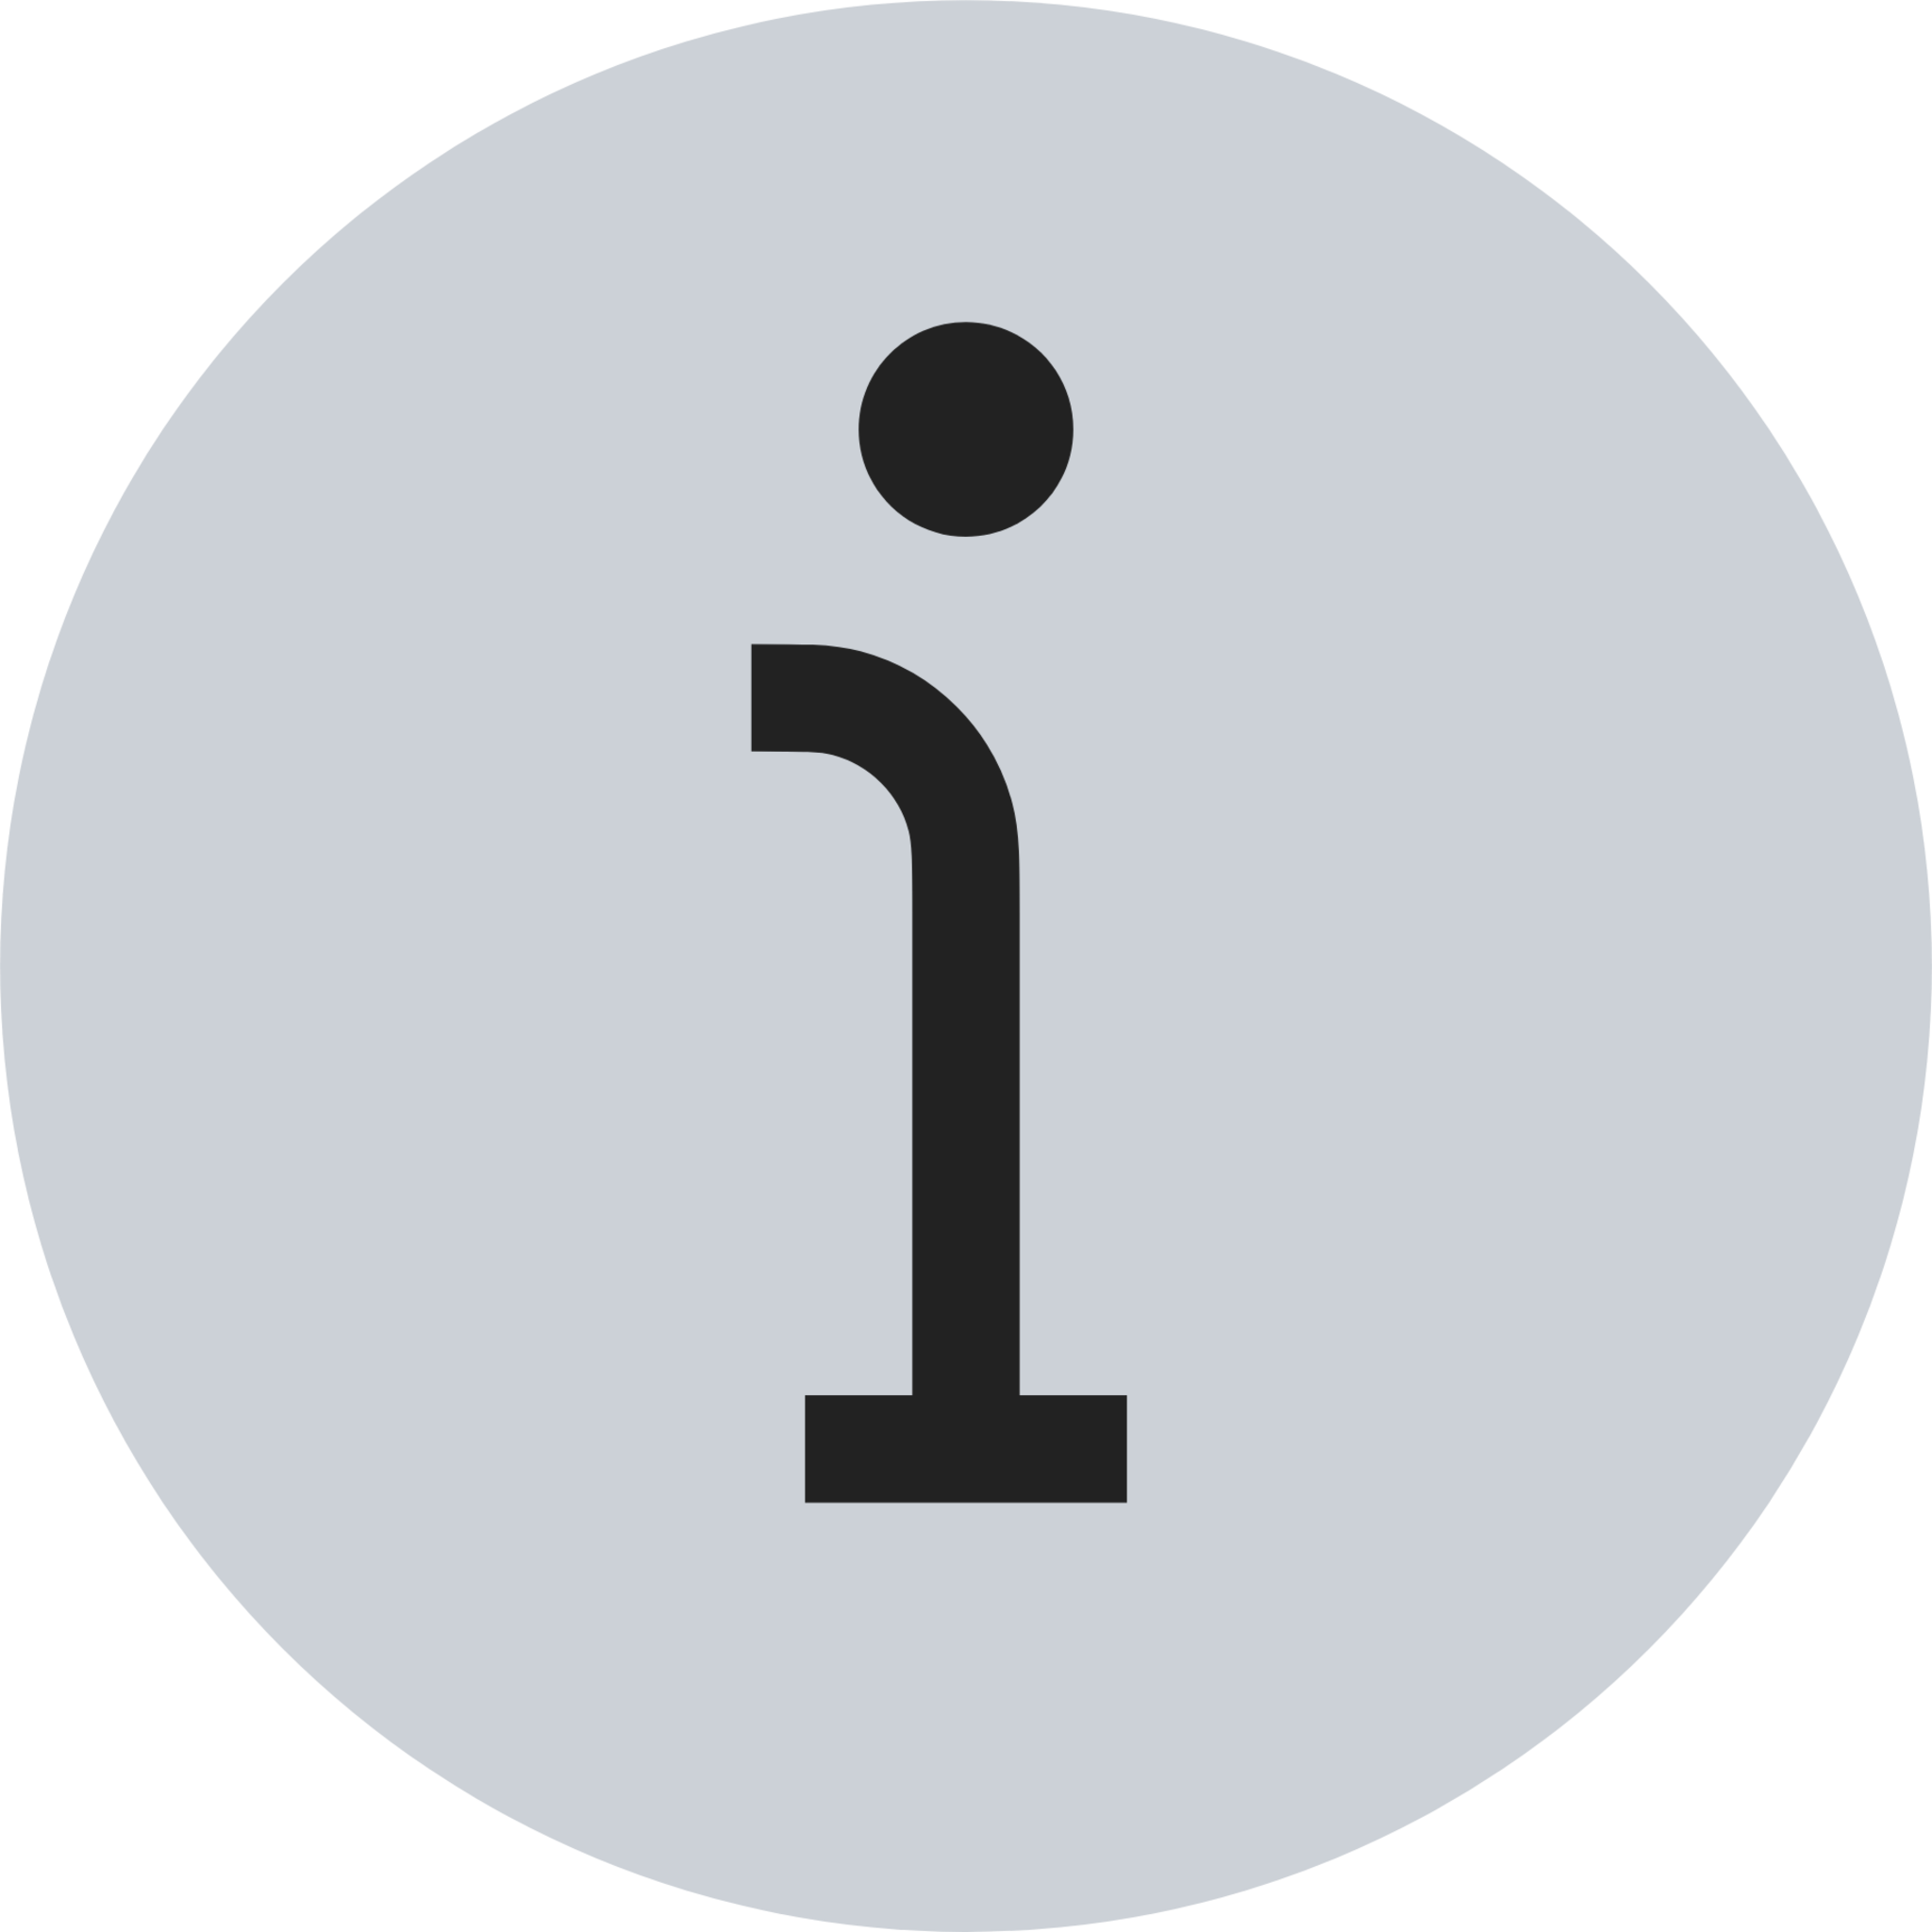 Info duotone icon